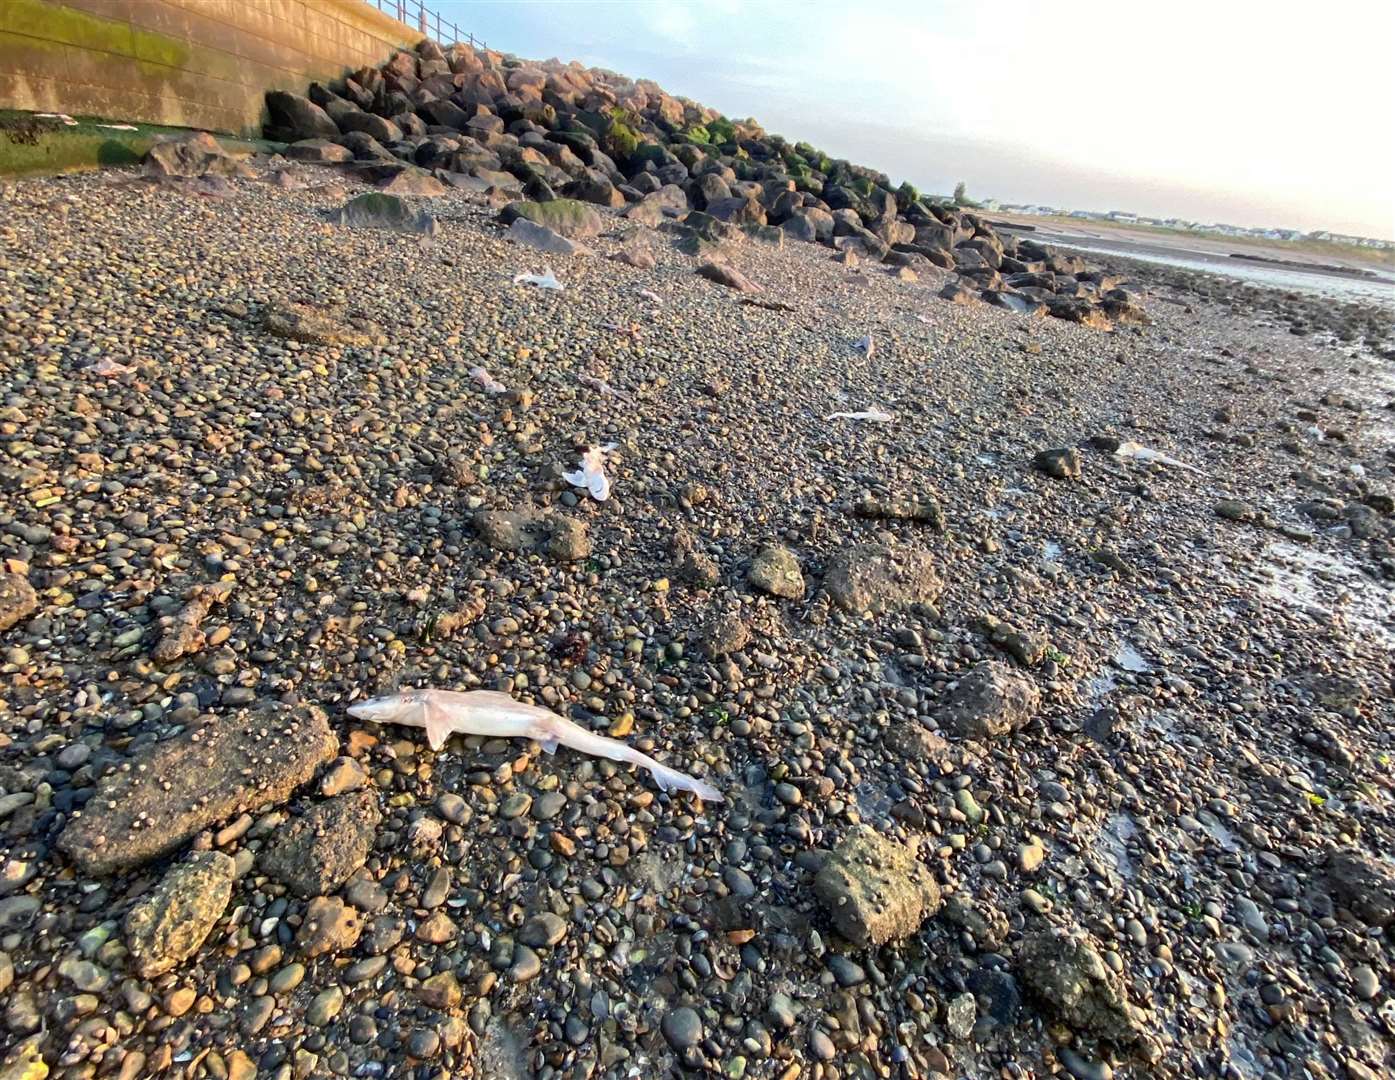 Dead sea creatures were found near Hampton Pier. Picture: Jordan Knight